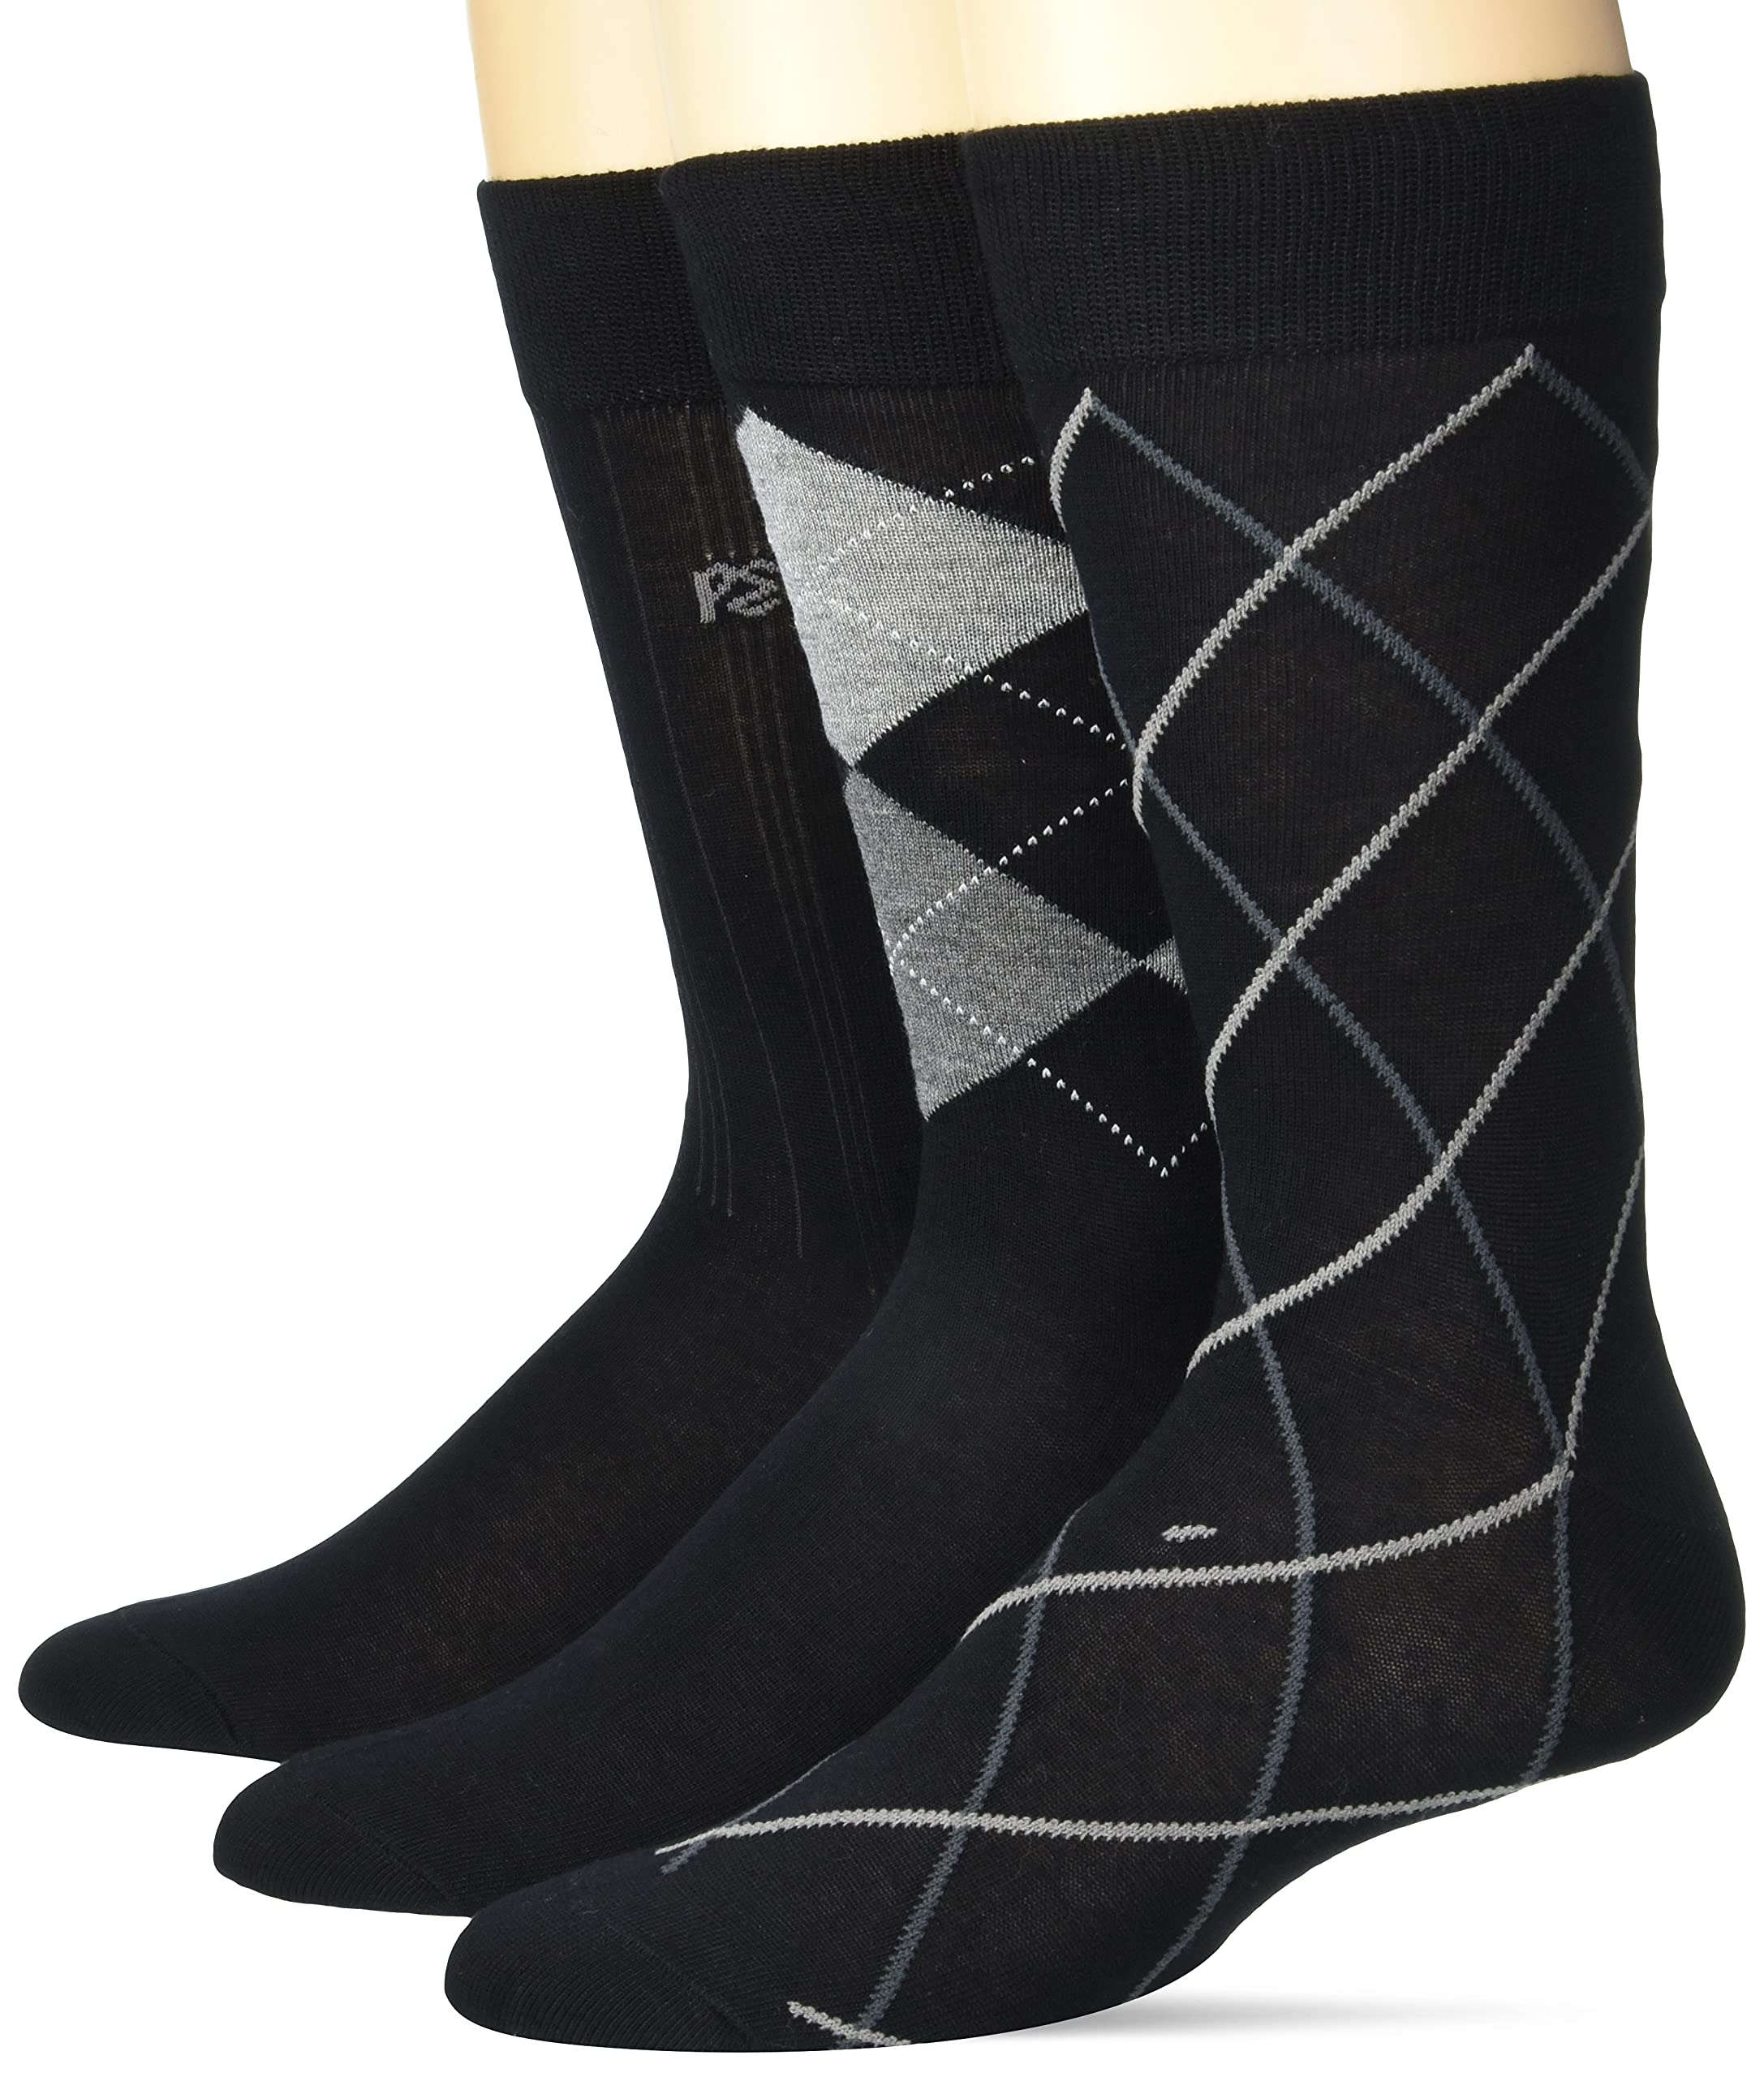 Perry Ellis Portfolio Men's Superior Soft Luxury Socks, 3-Pack, Argyle Black, One Size